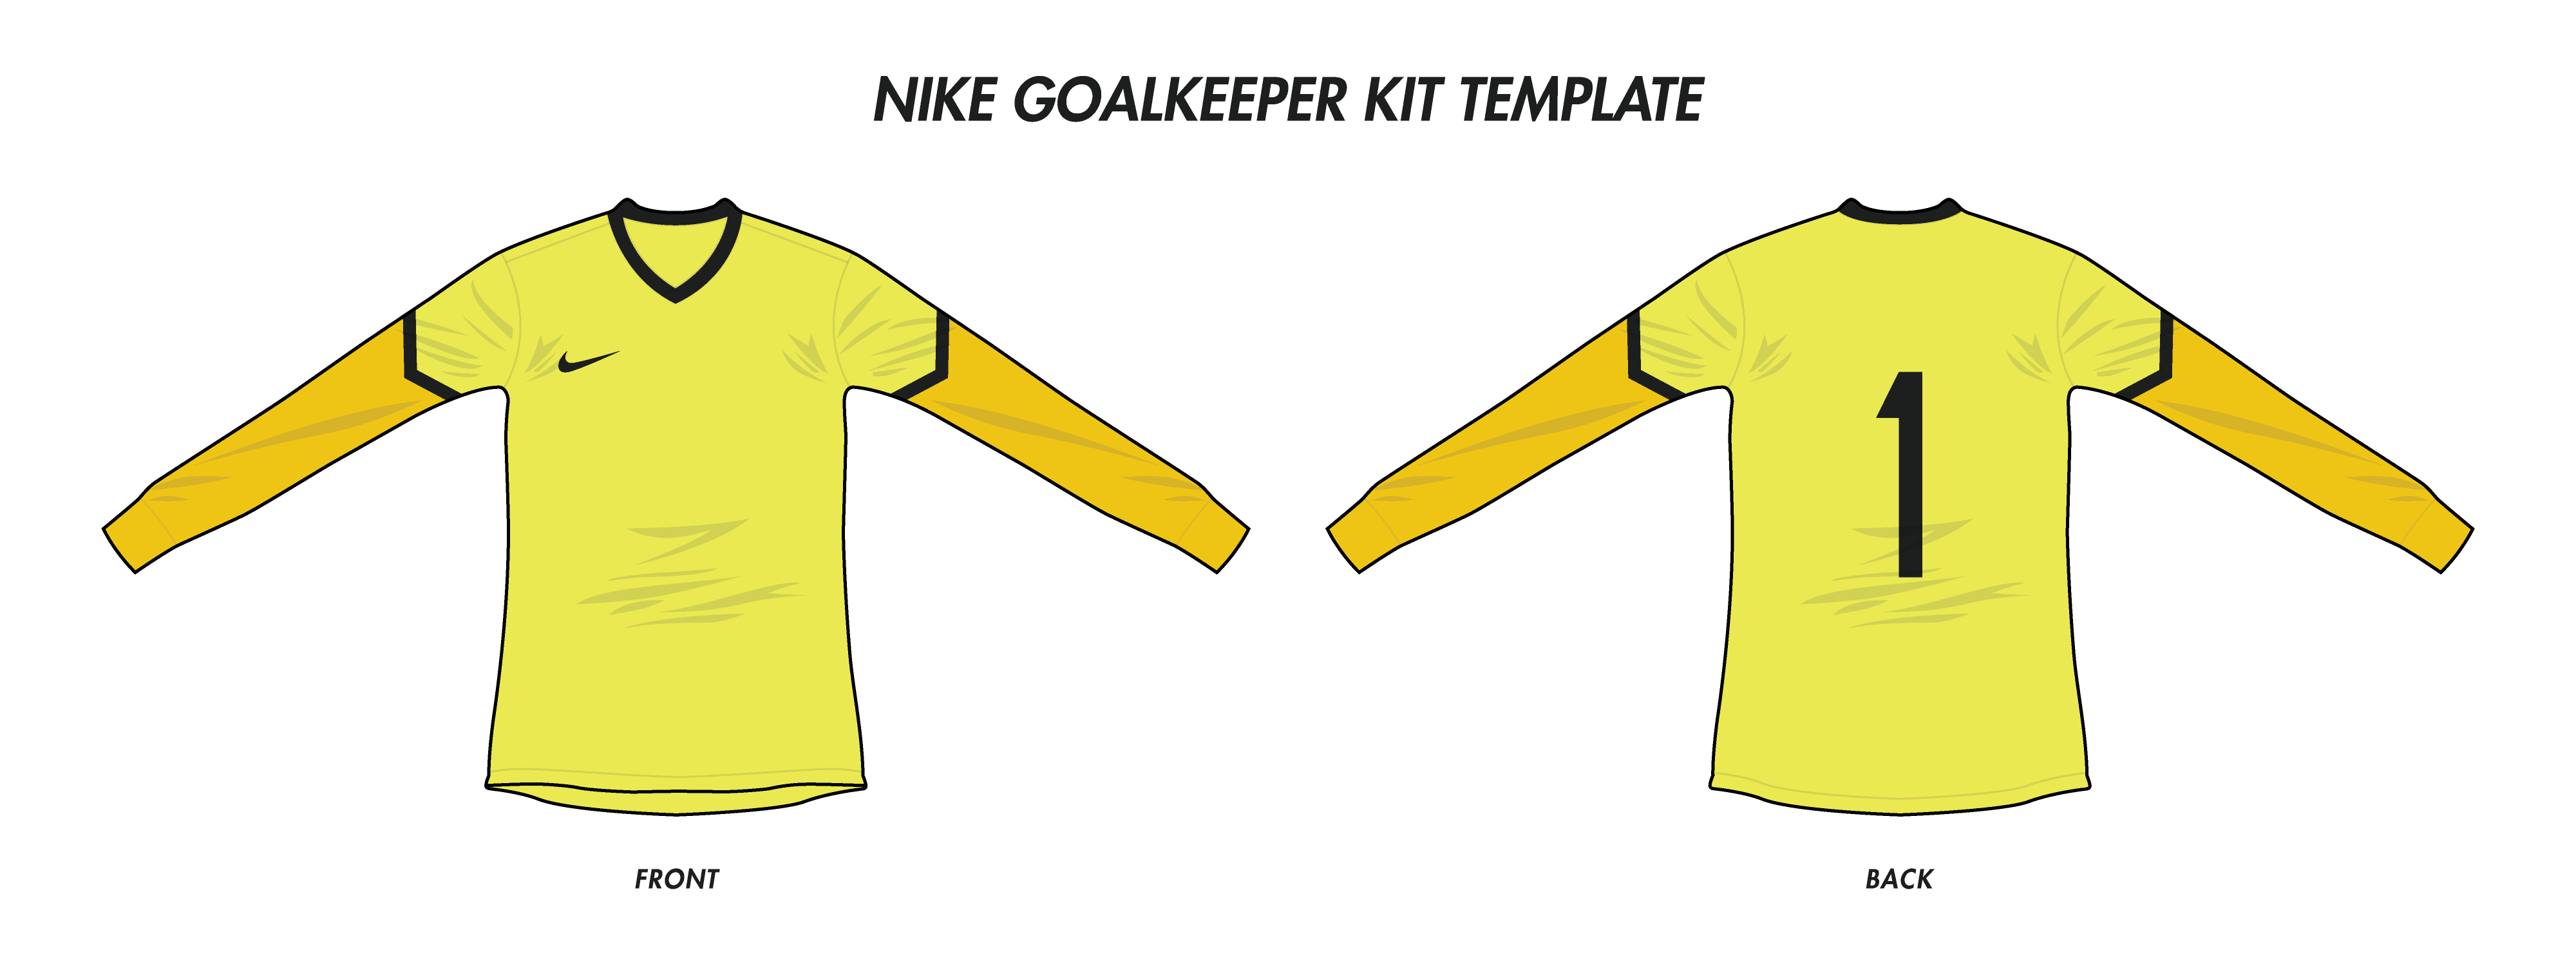 nike-goalkeeper-kit-template-6